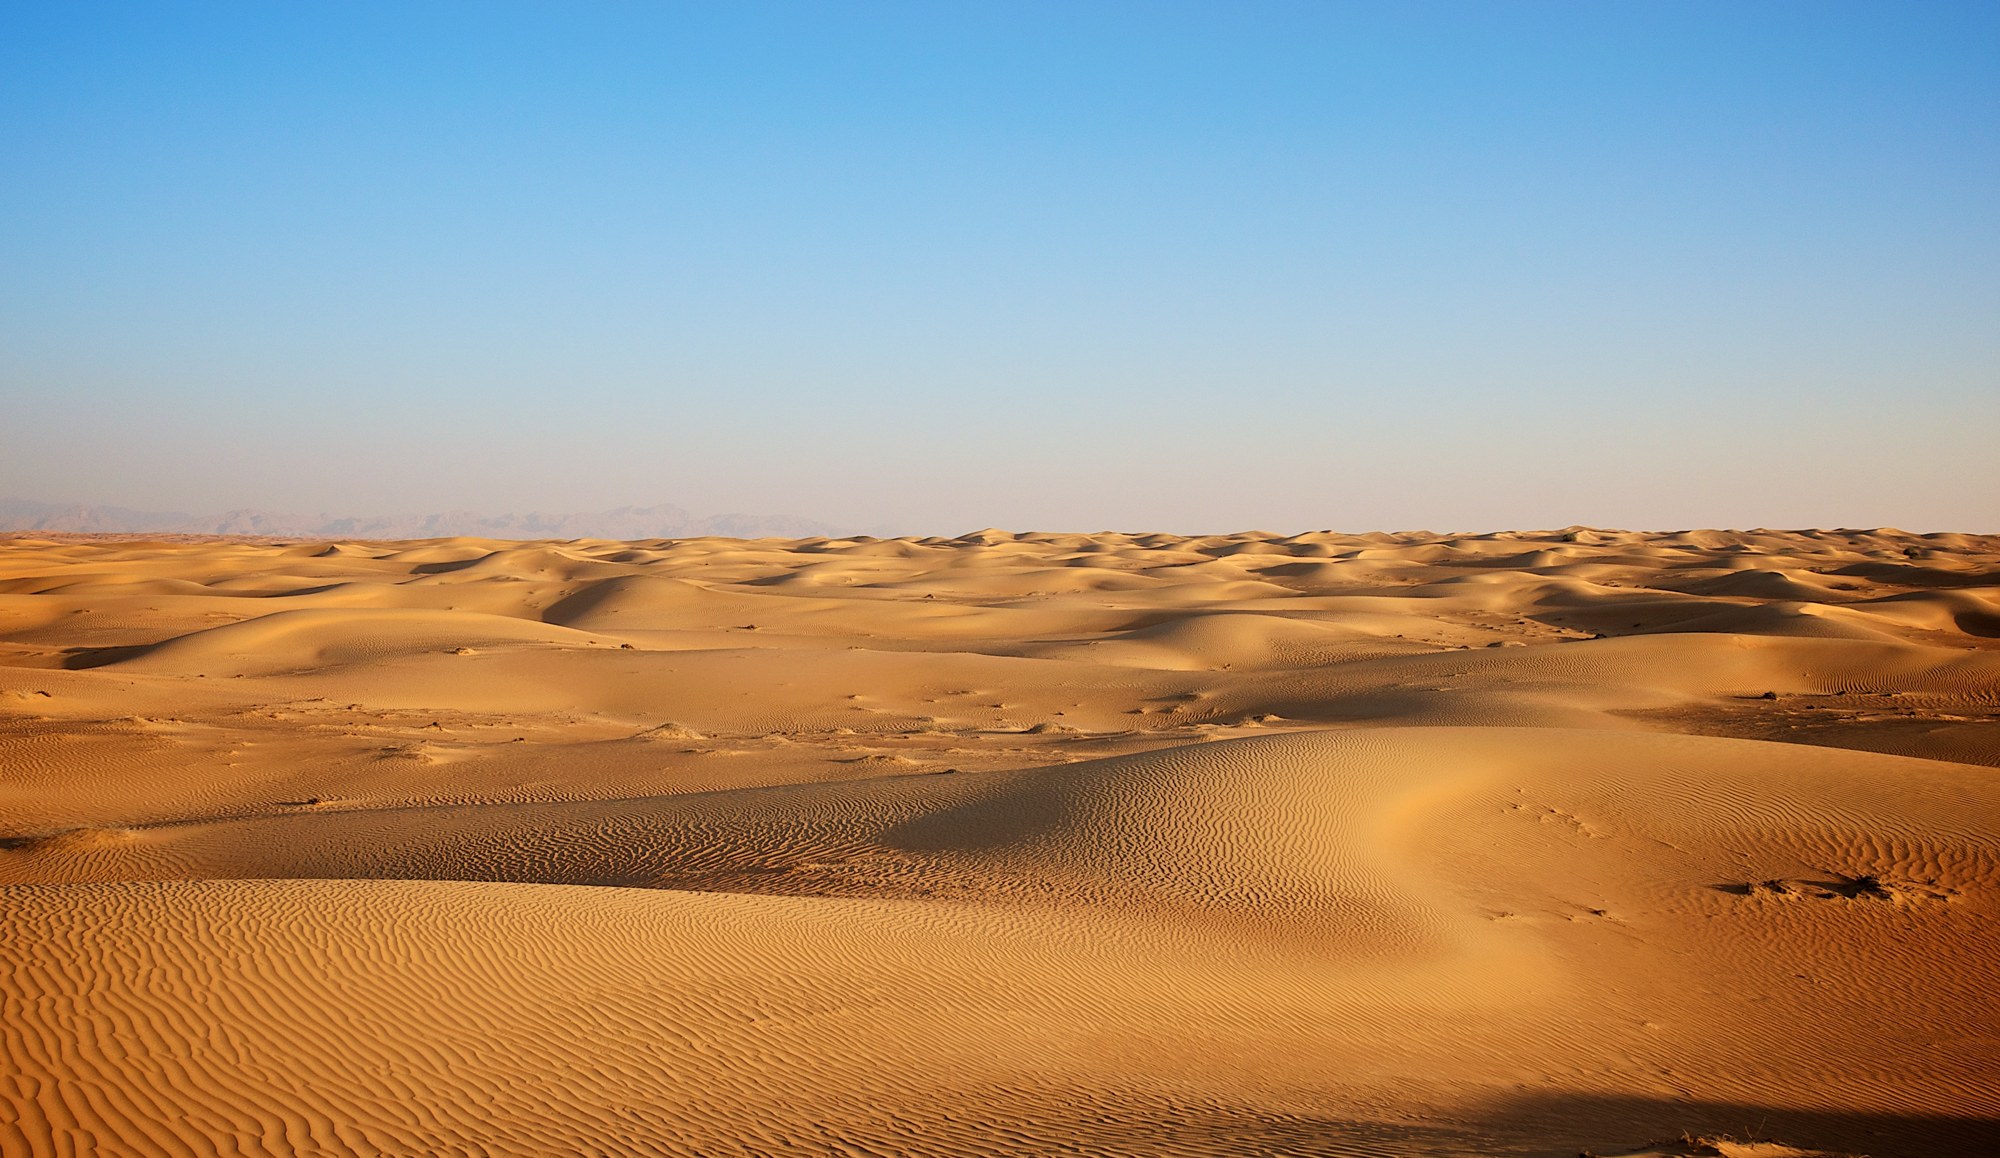 DUBAI: Put your mind at ease ...the sands of Dubai